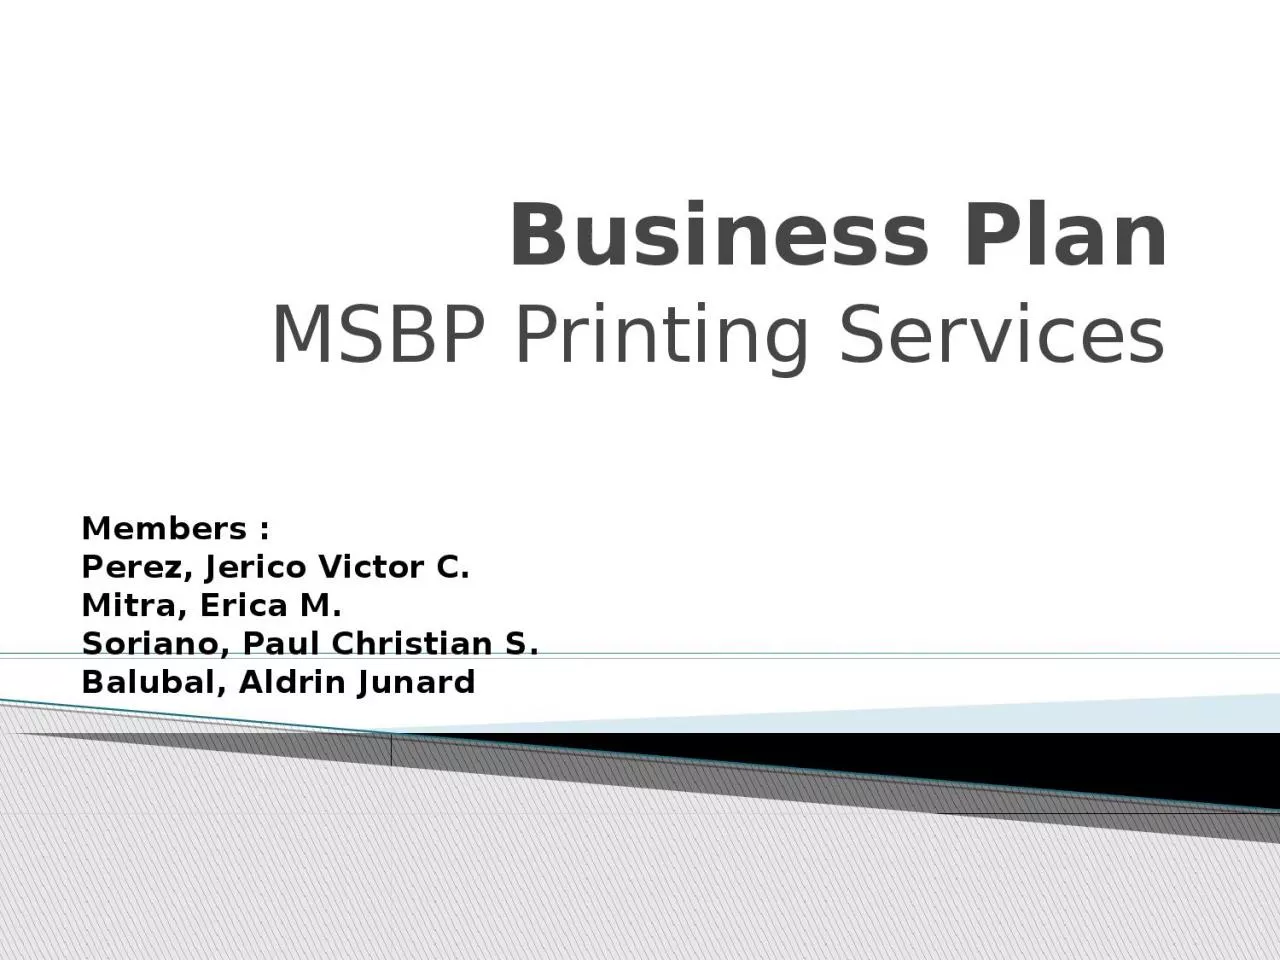 Business Plan MSBP Printing Services